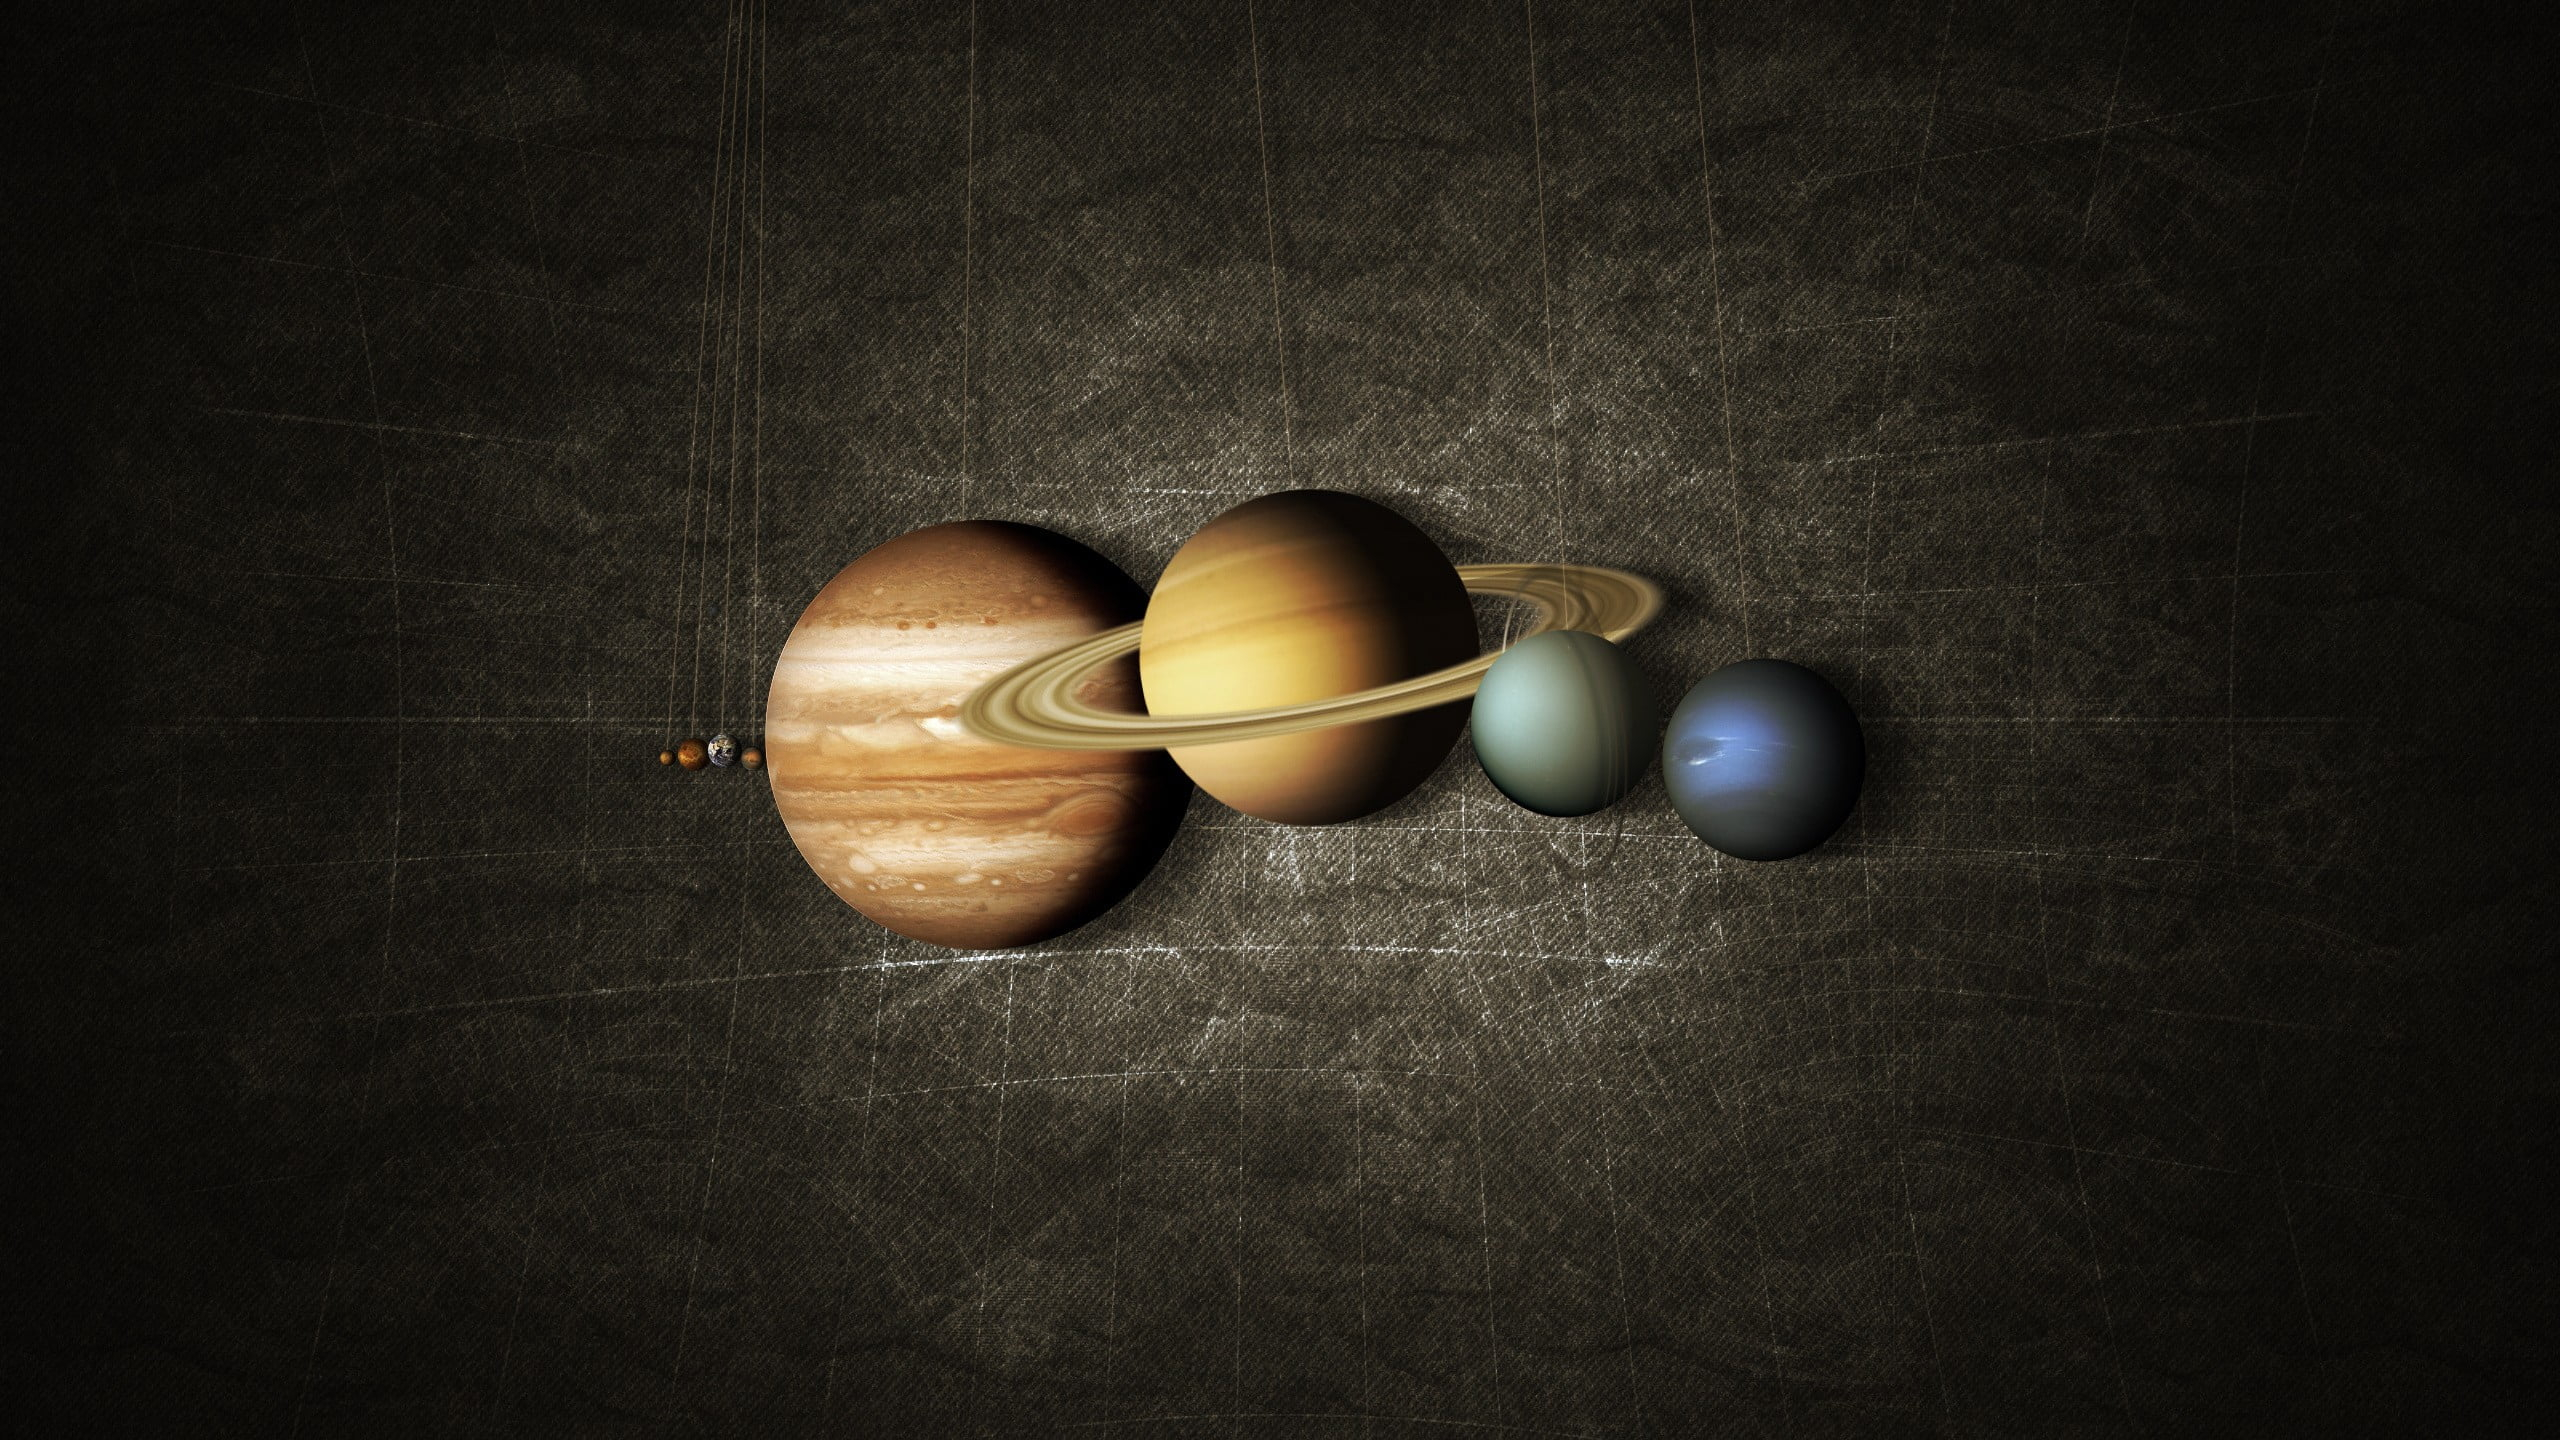 Planets illustration wallpaper, space, universe, Mercury, Venus, Earth